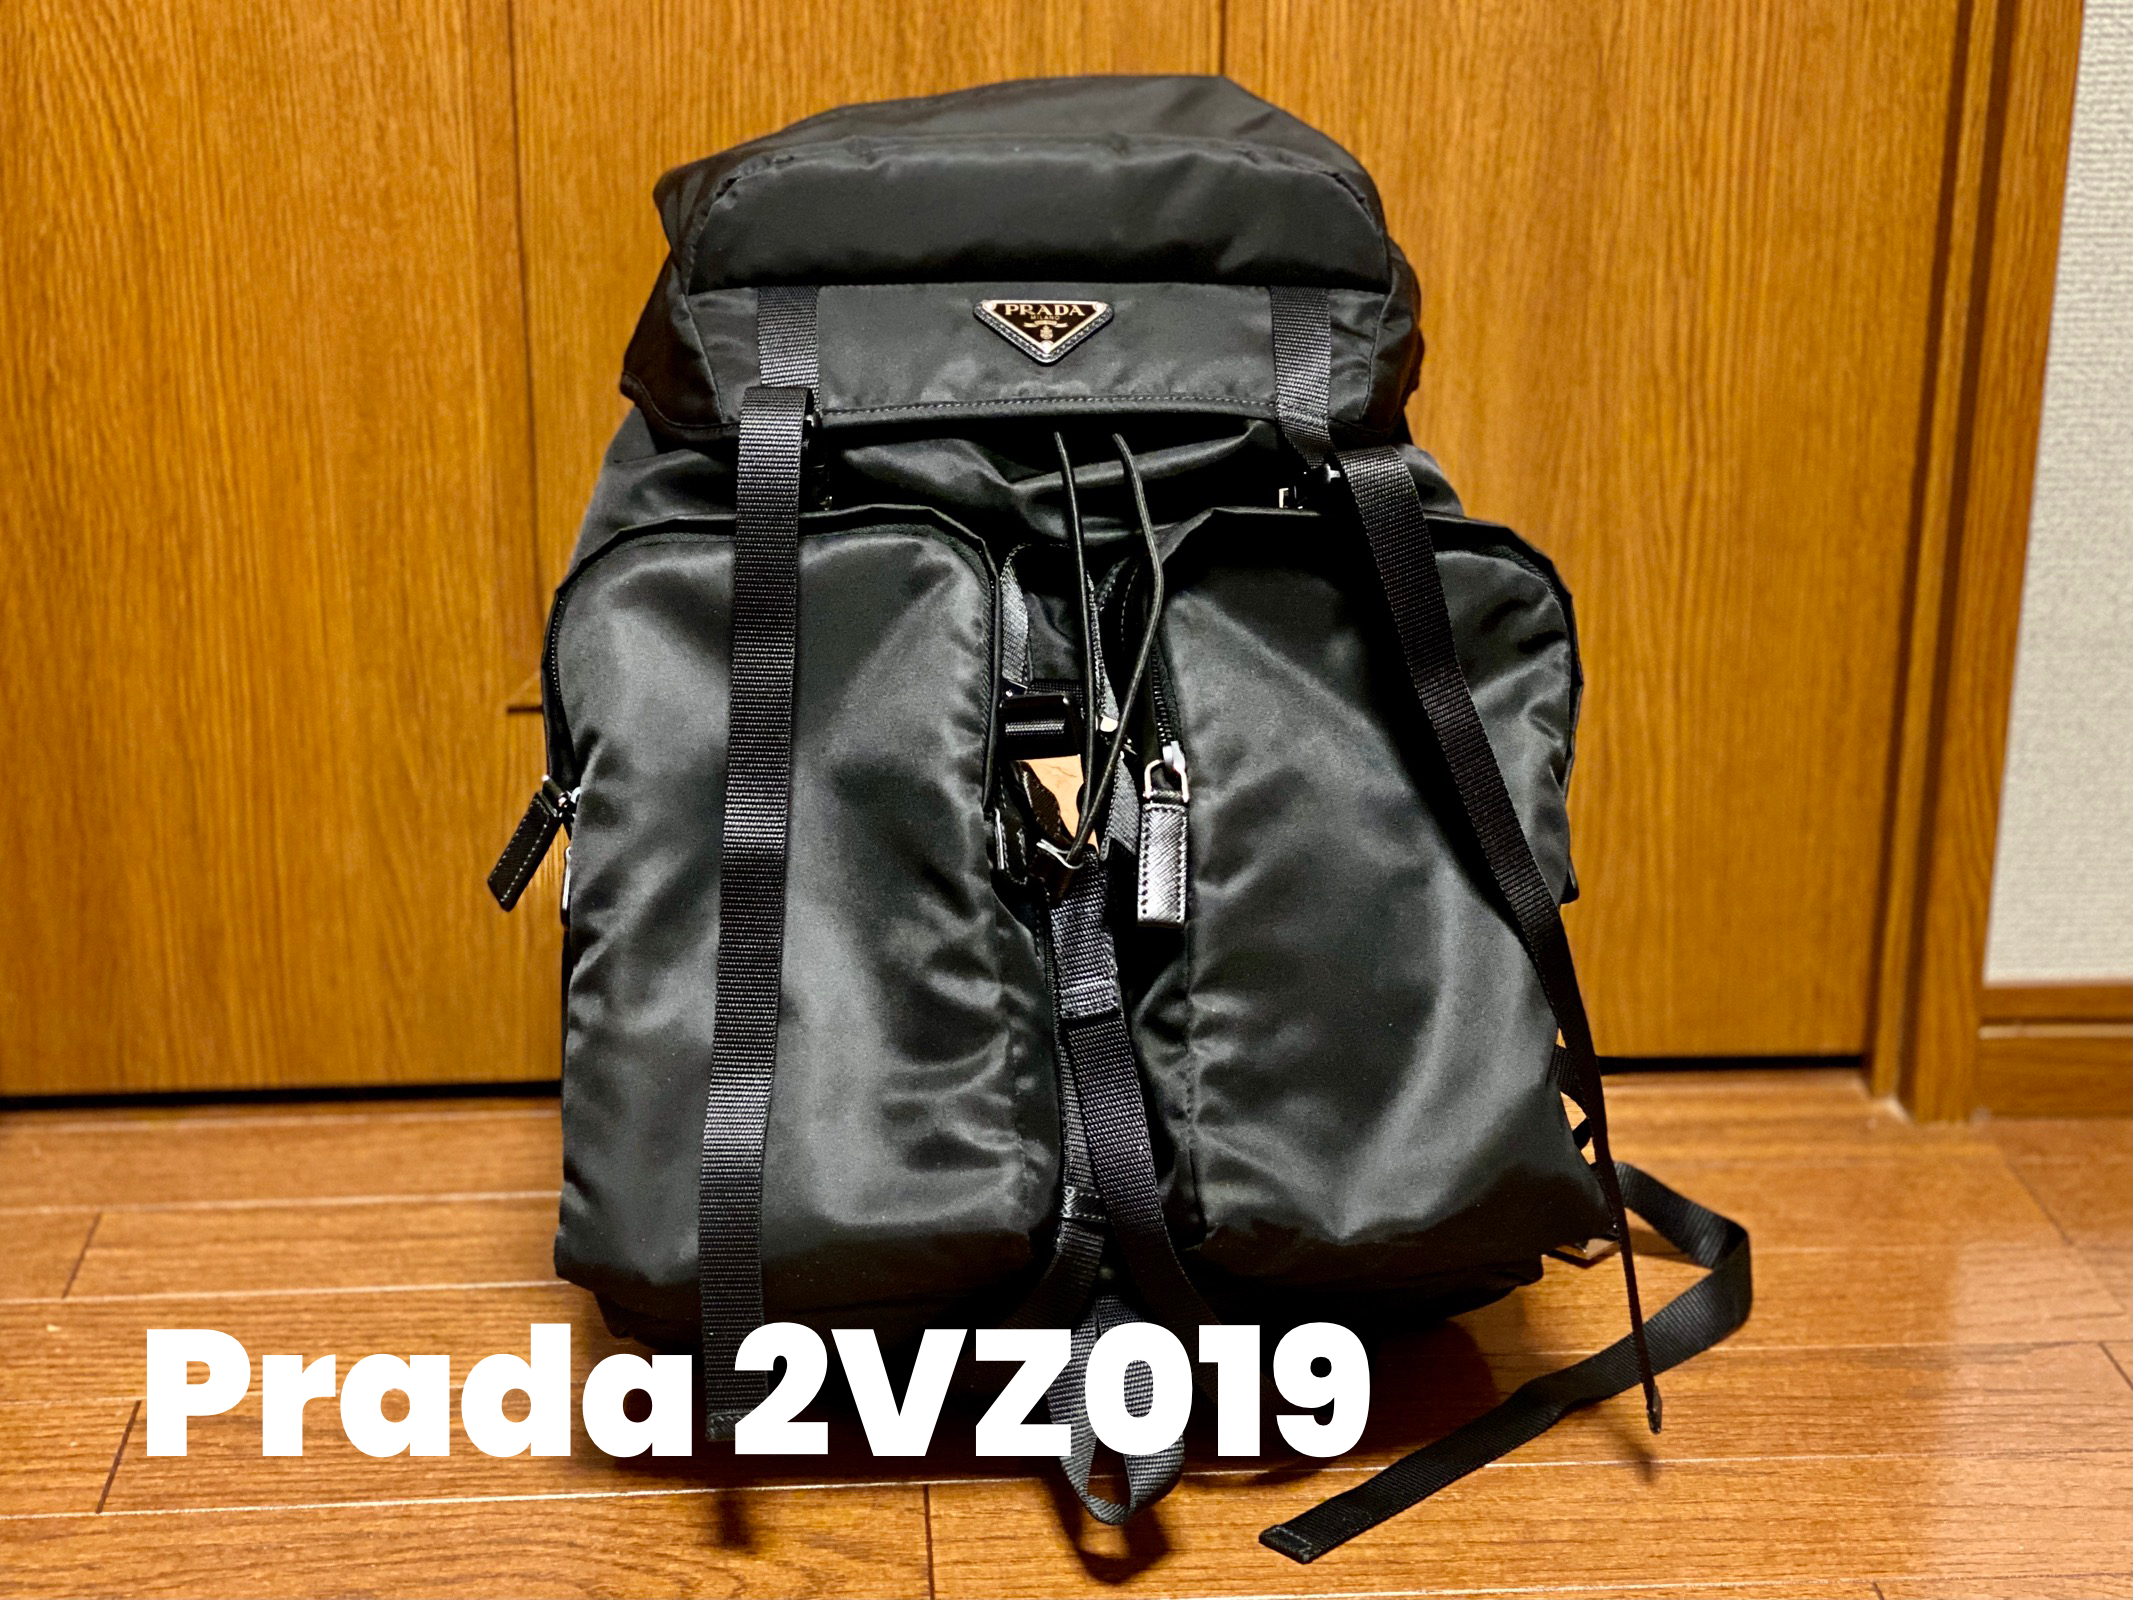 Prada 2VZ019 Backpack Review - whattodotomorrow